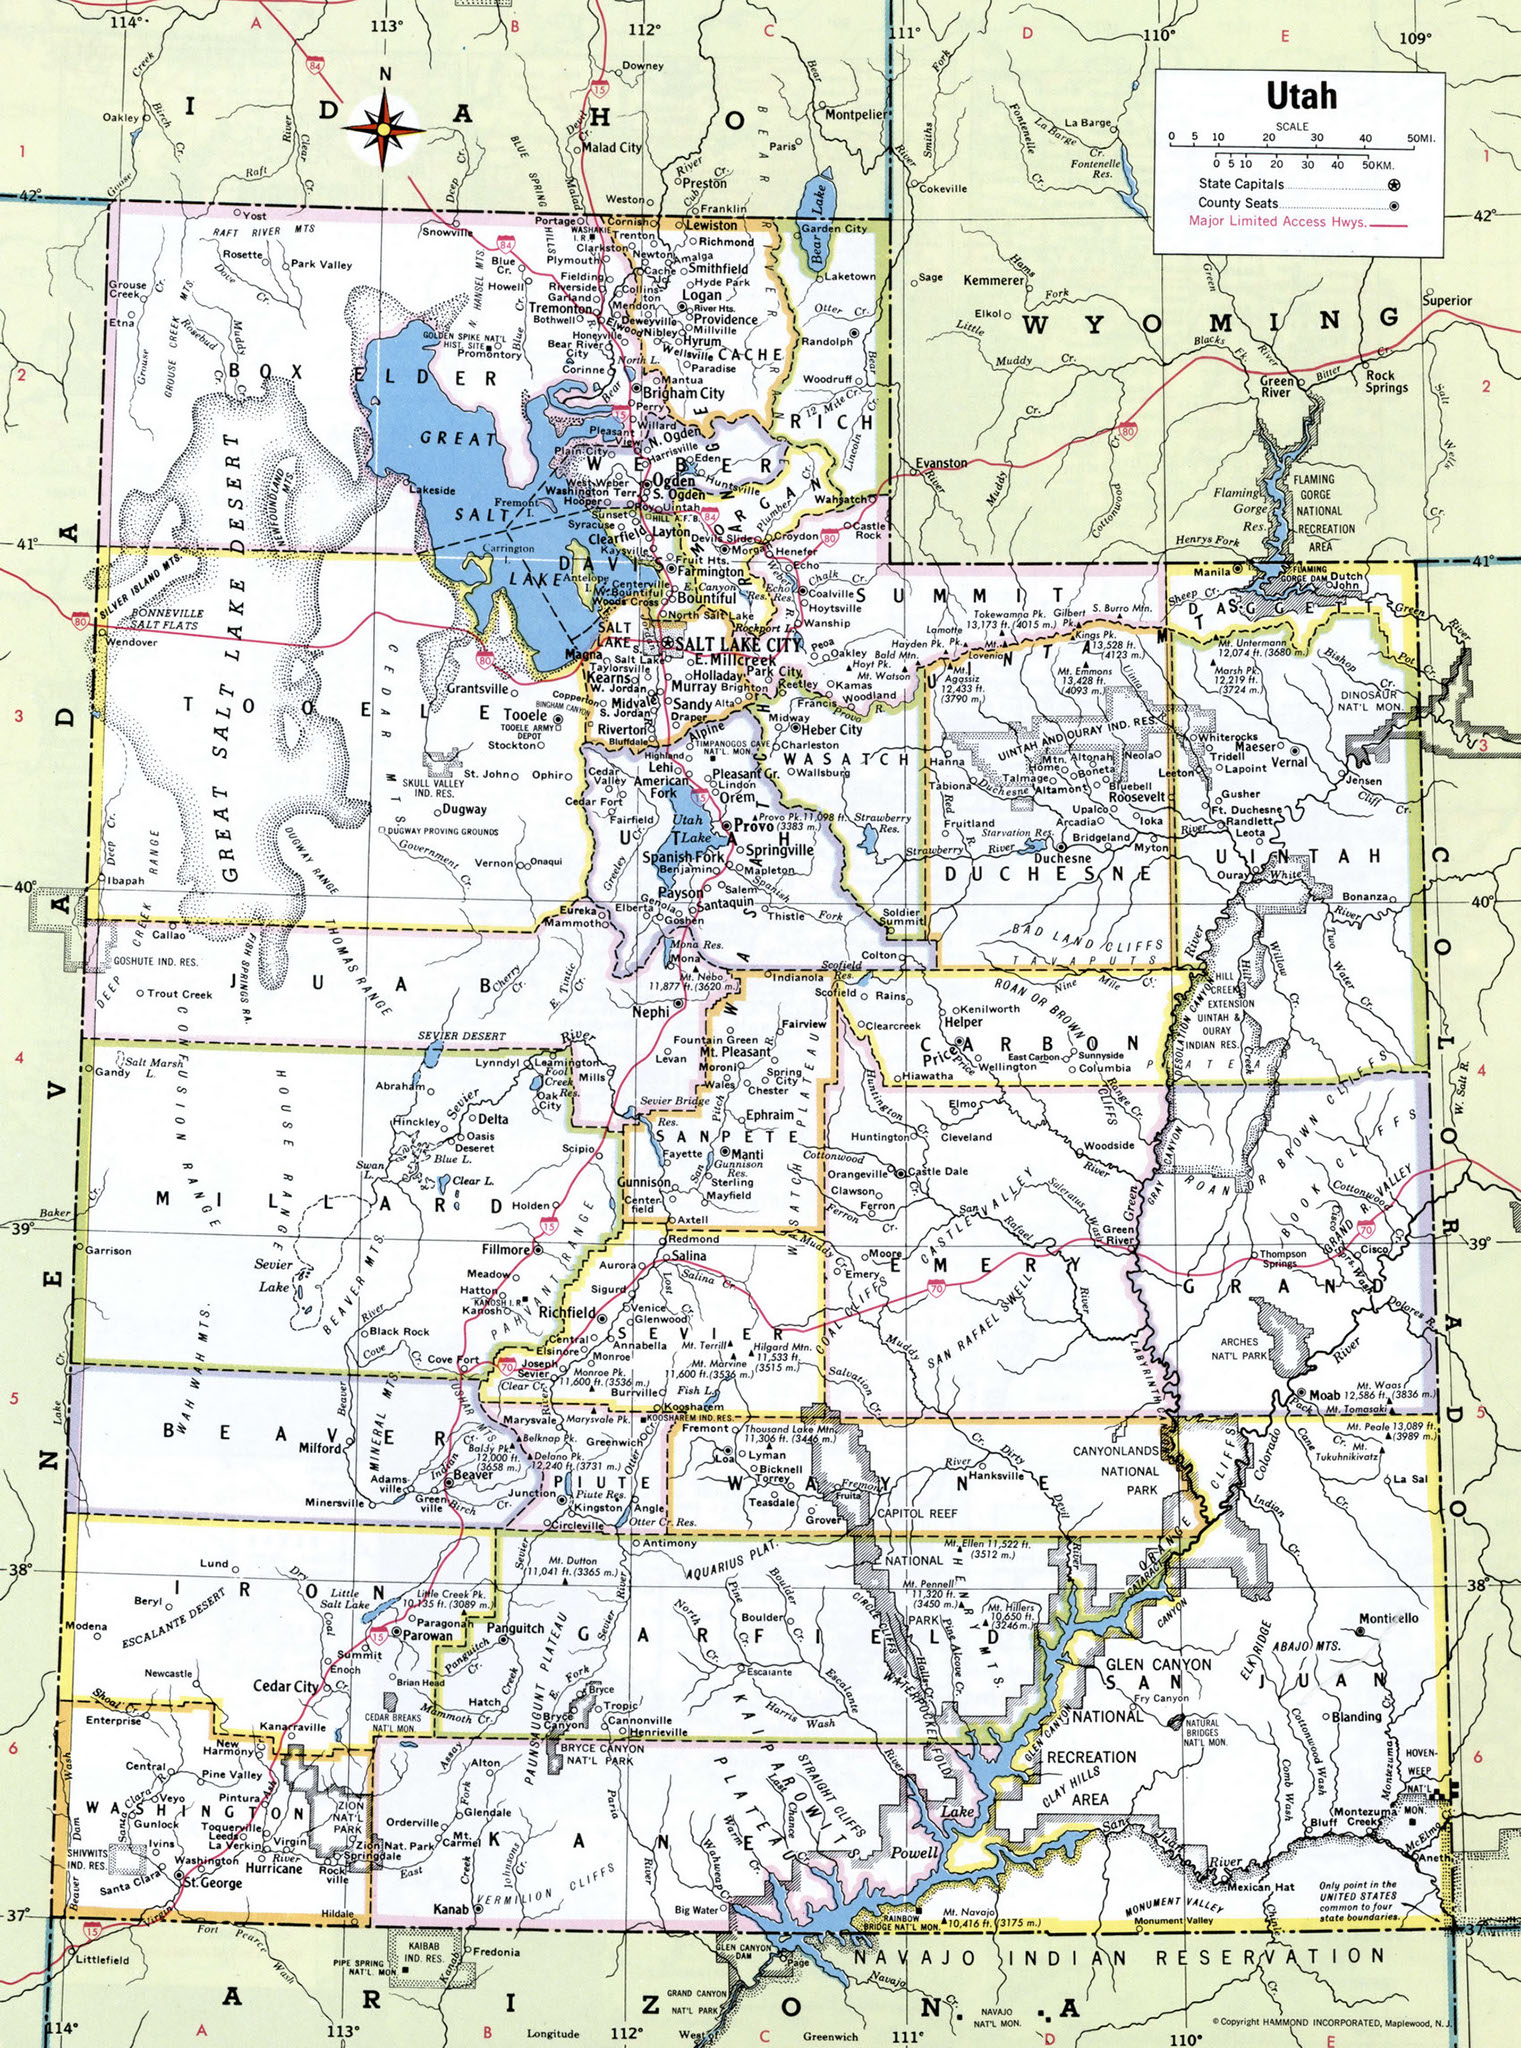 Map of Utah by county